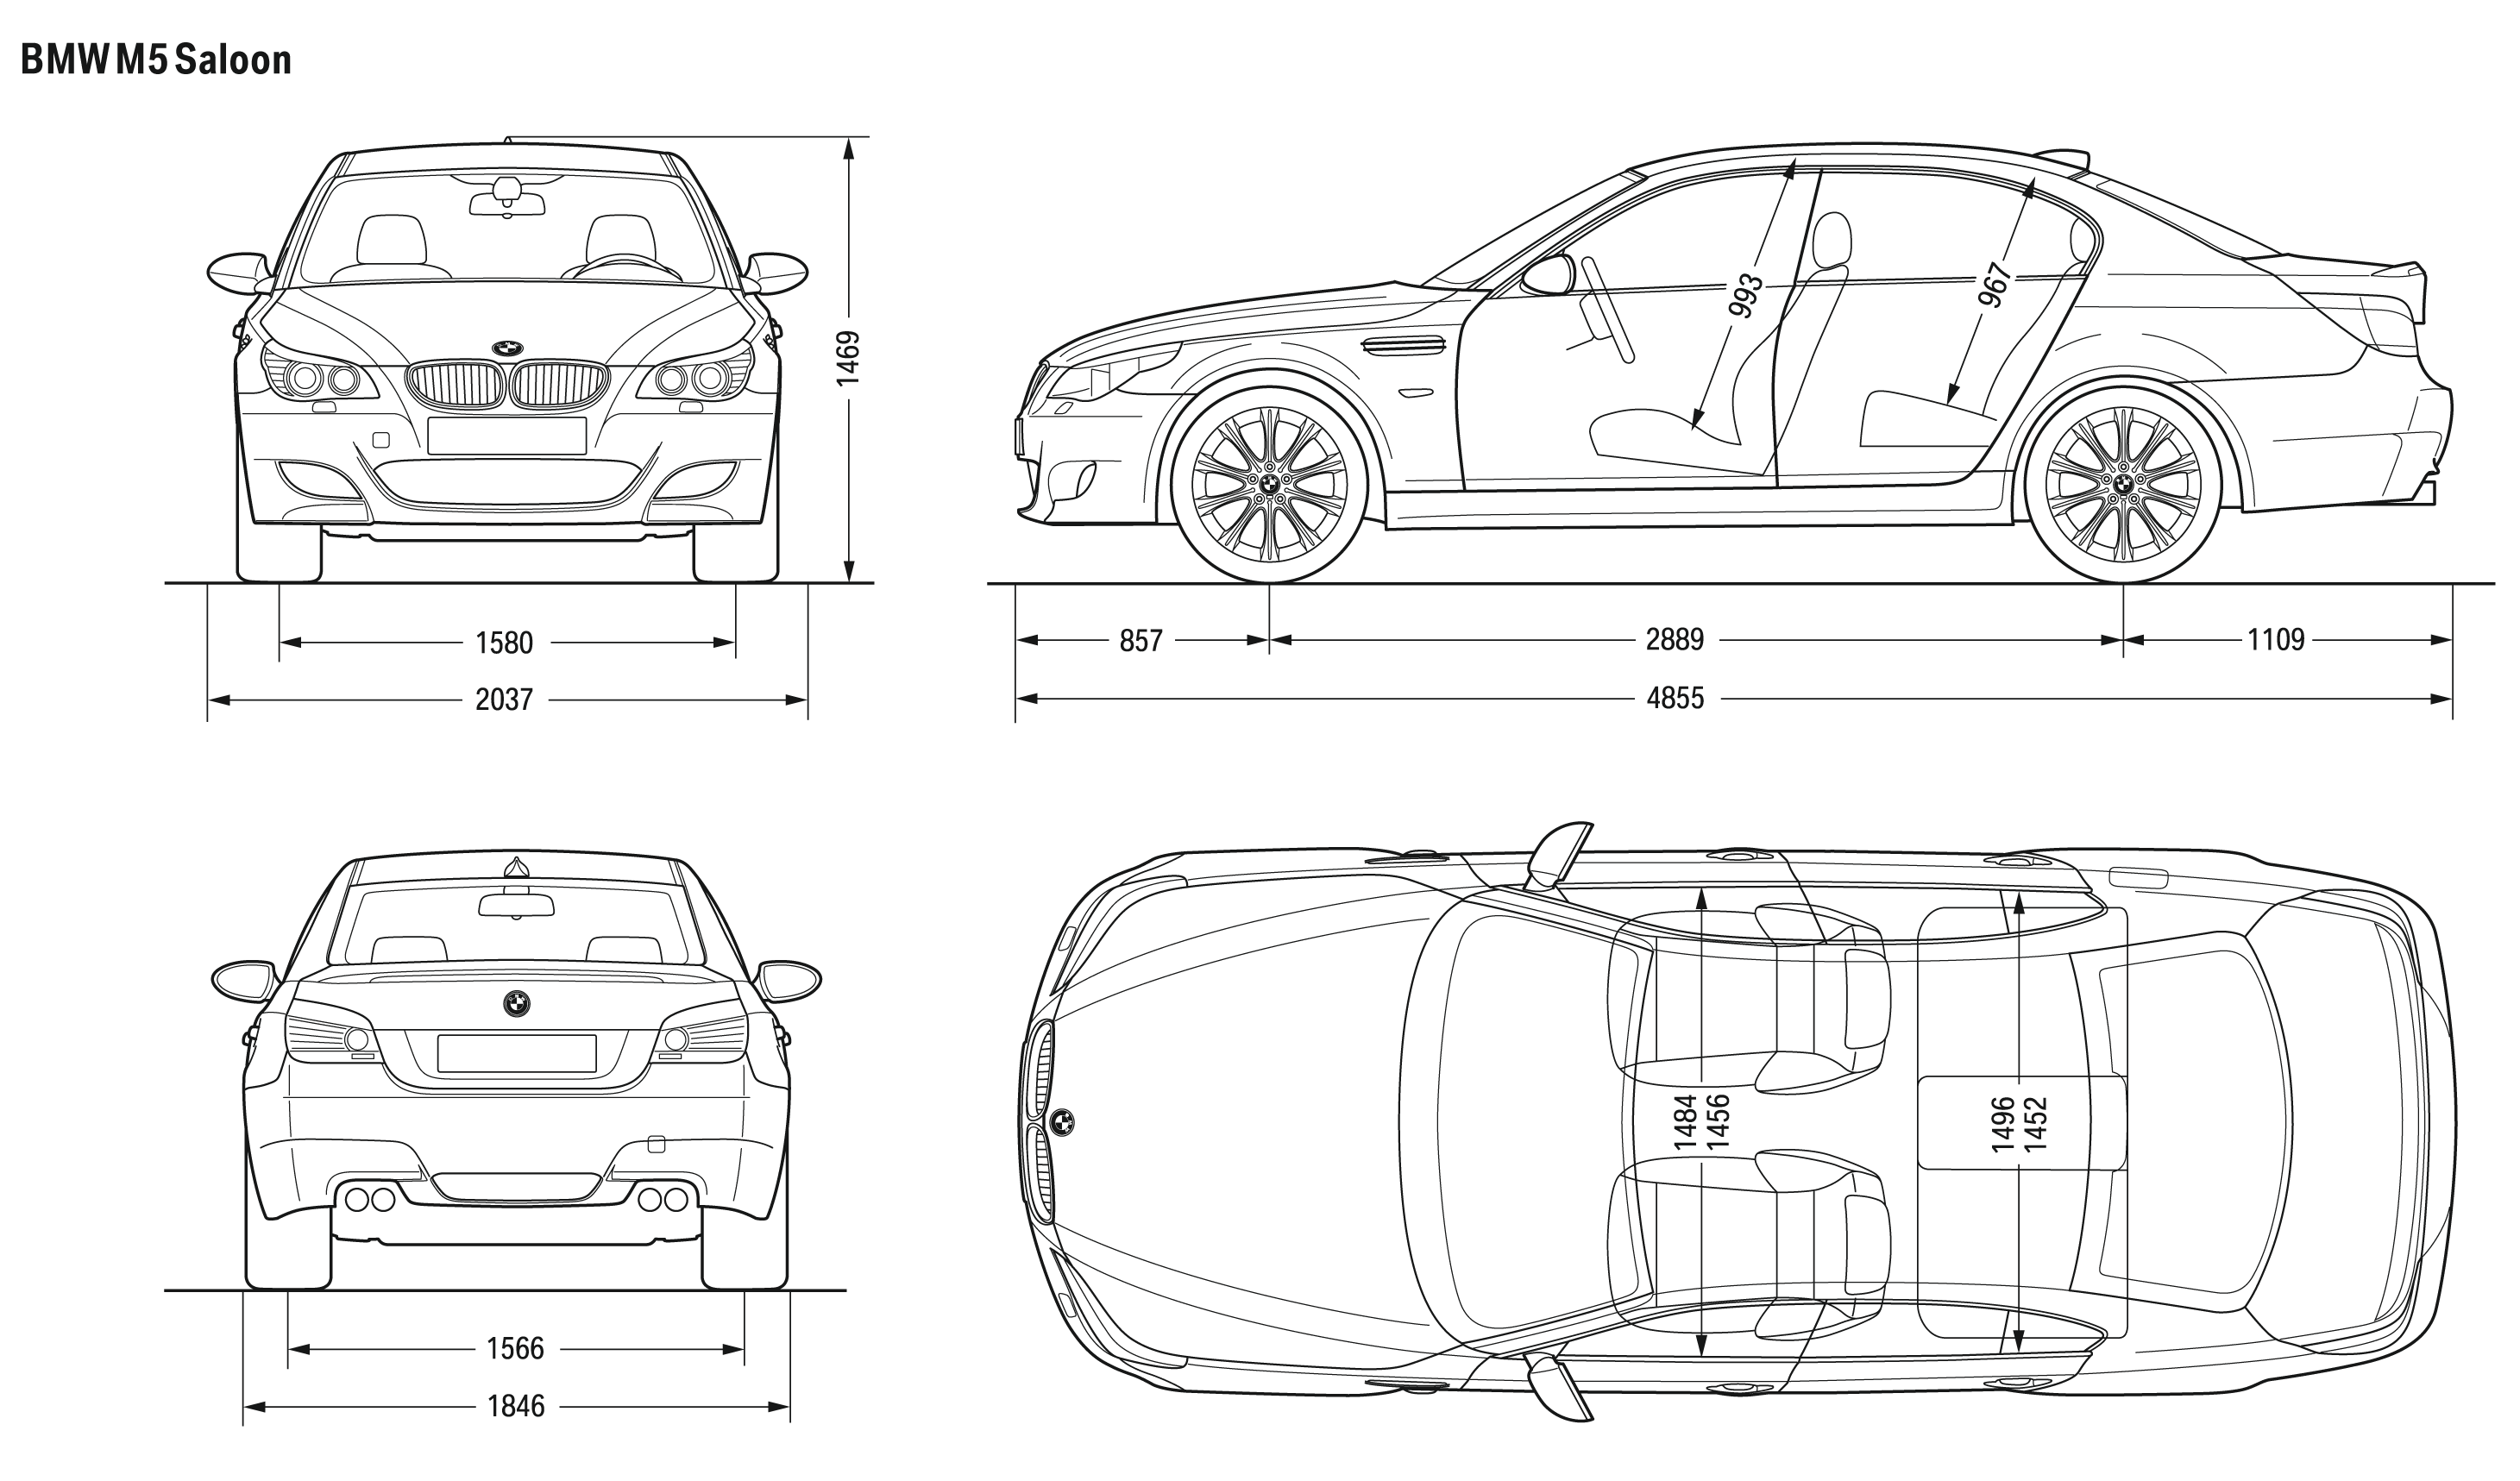 2007 BMW M5 E60 Saloon Sedan blueprints free - Outlines